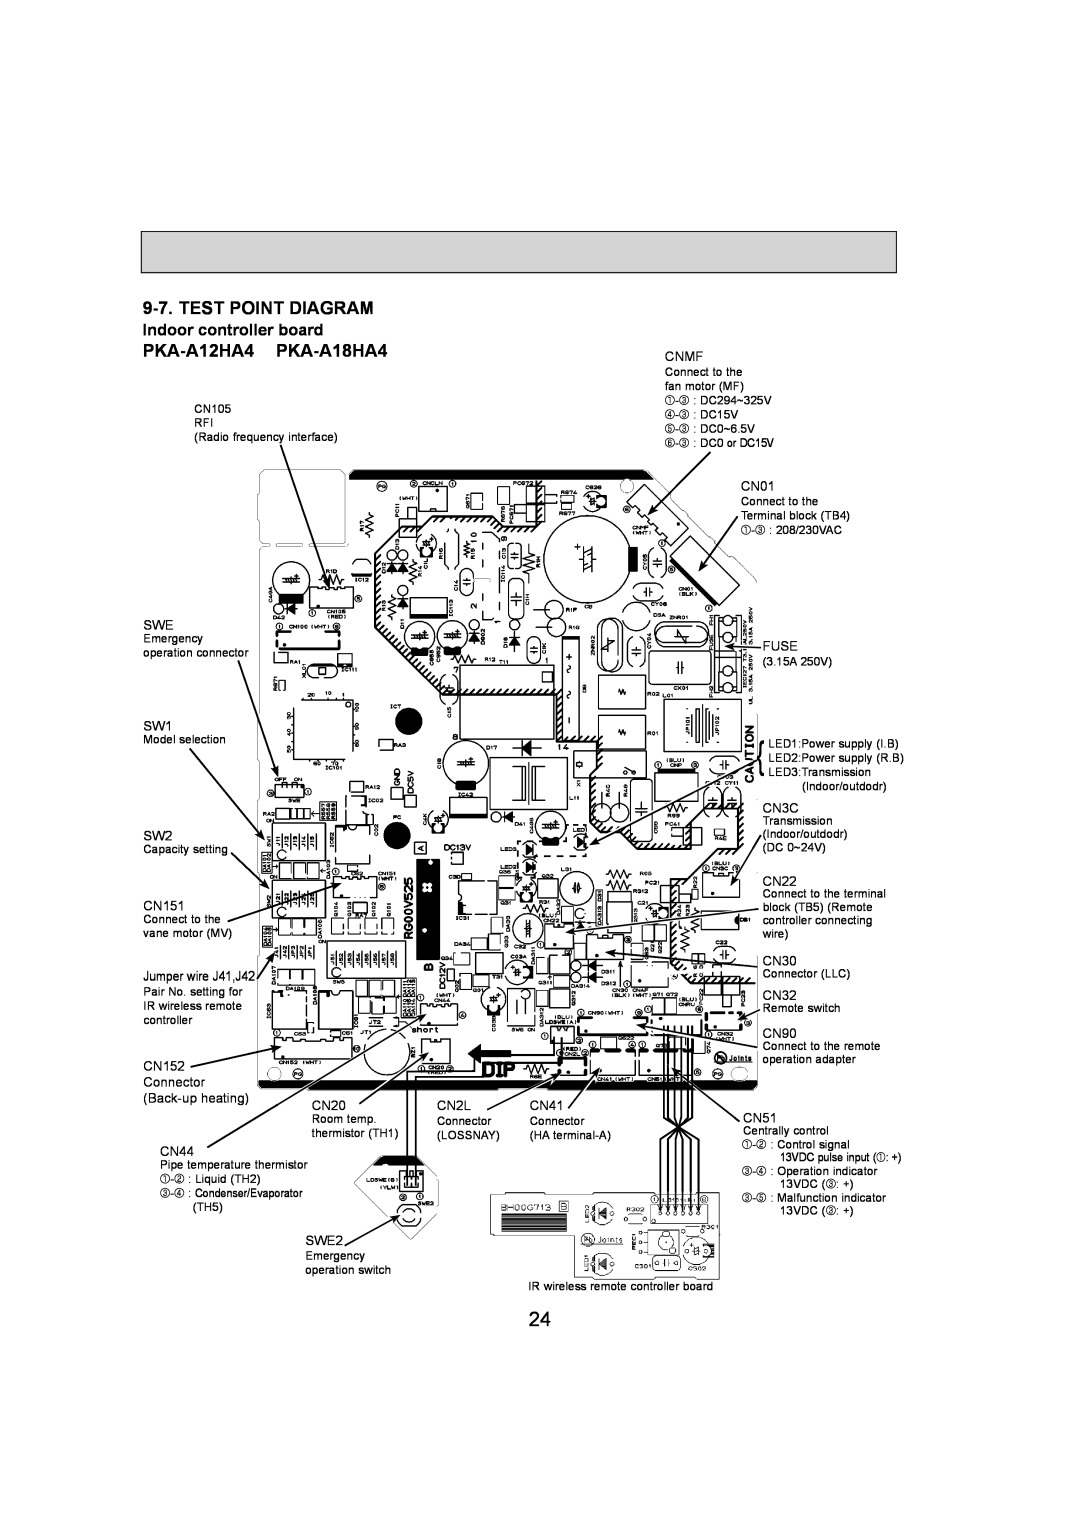 Mitsumi electronic service manual Test Point Diagram, PKA-A12HA4 PKA-A18HA4, Indoor controller board 